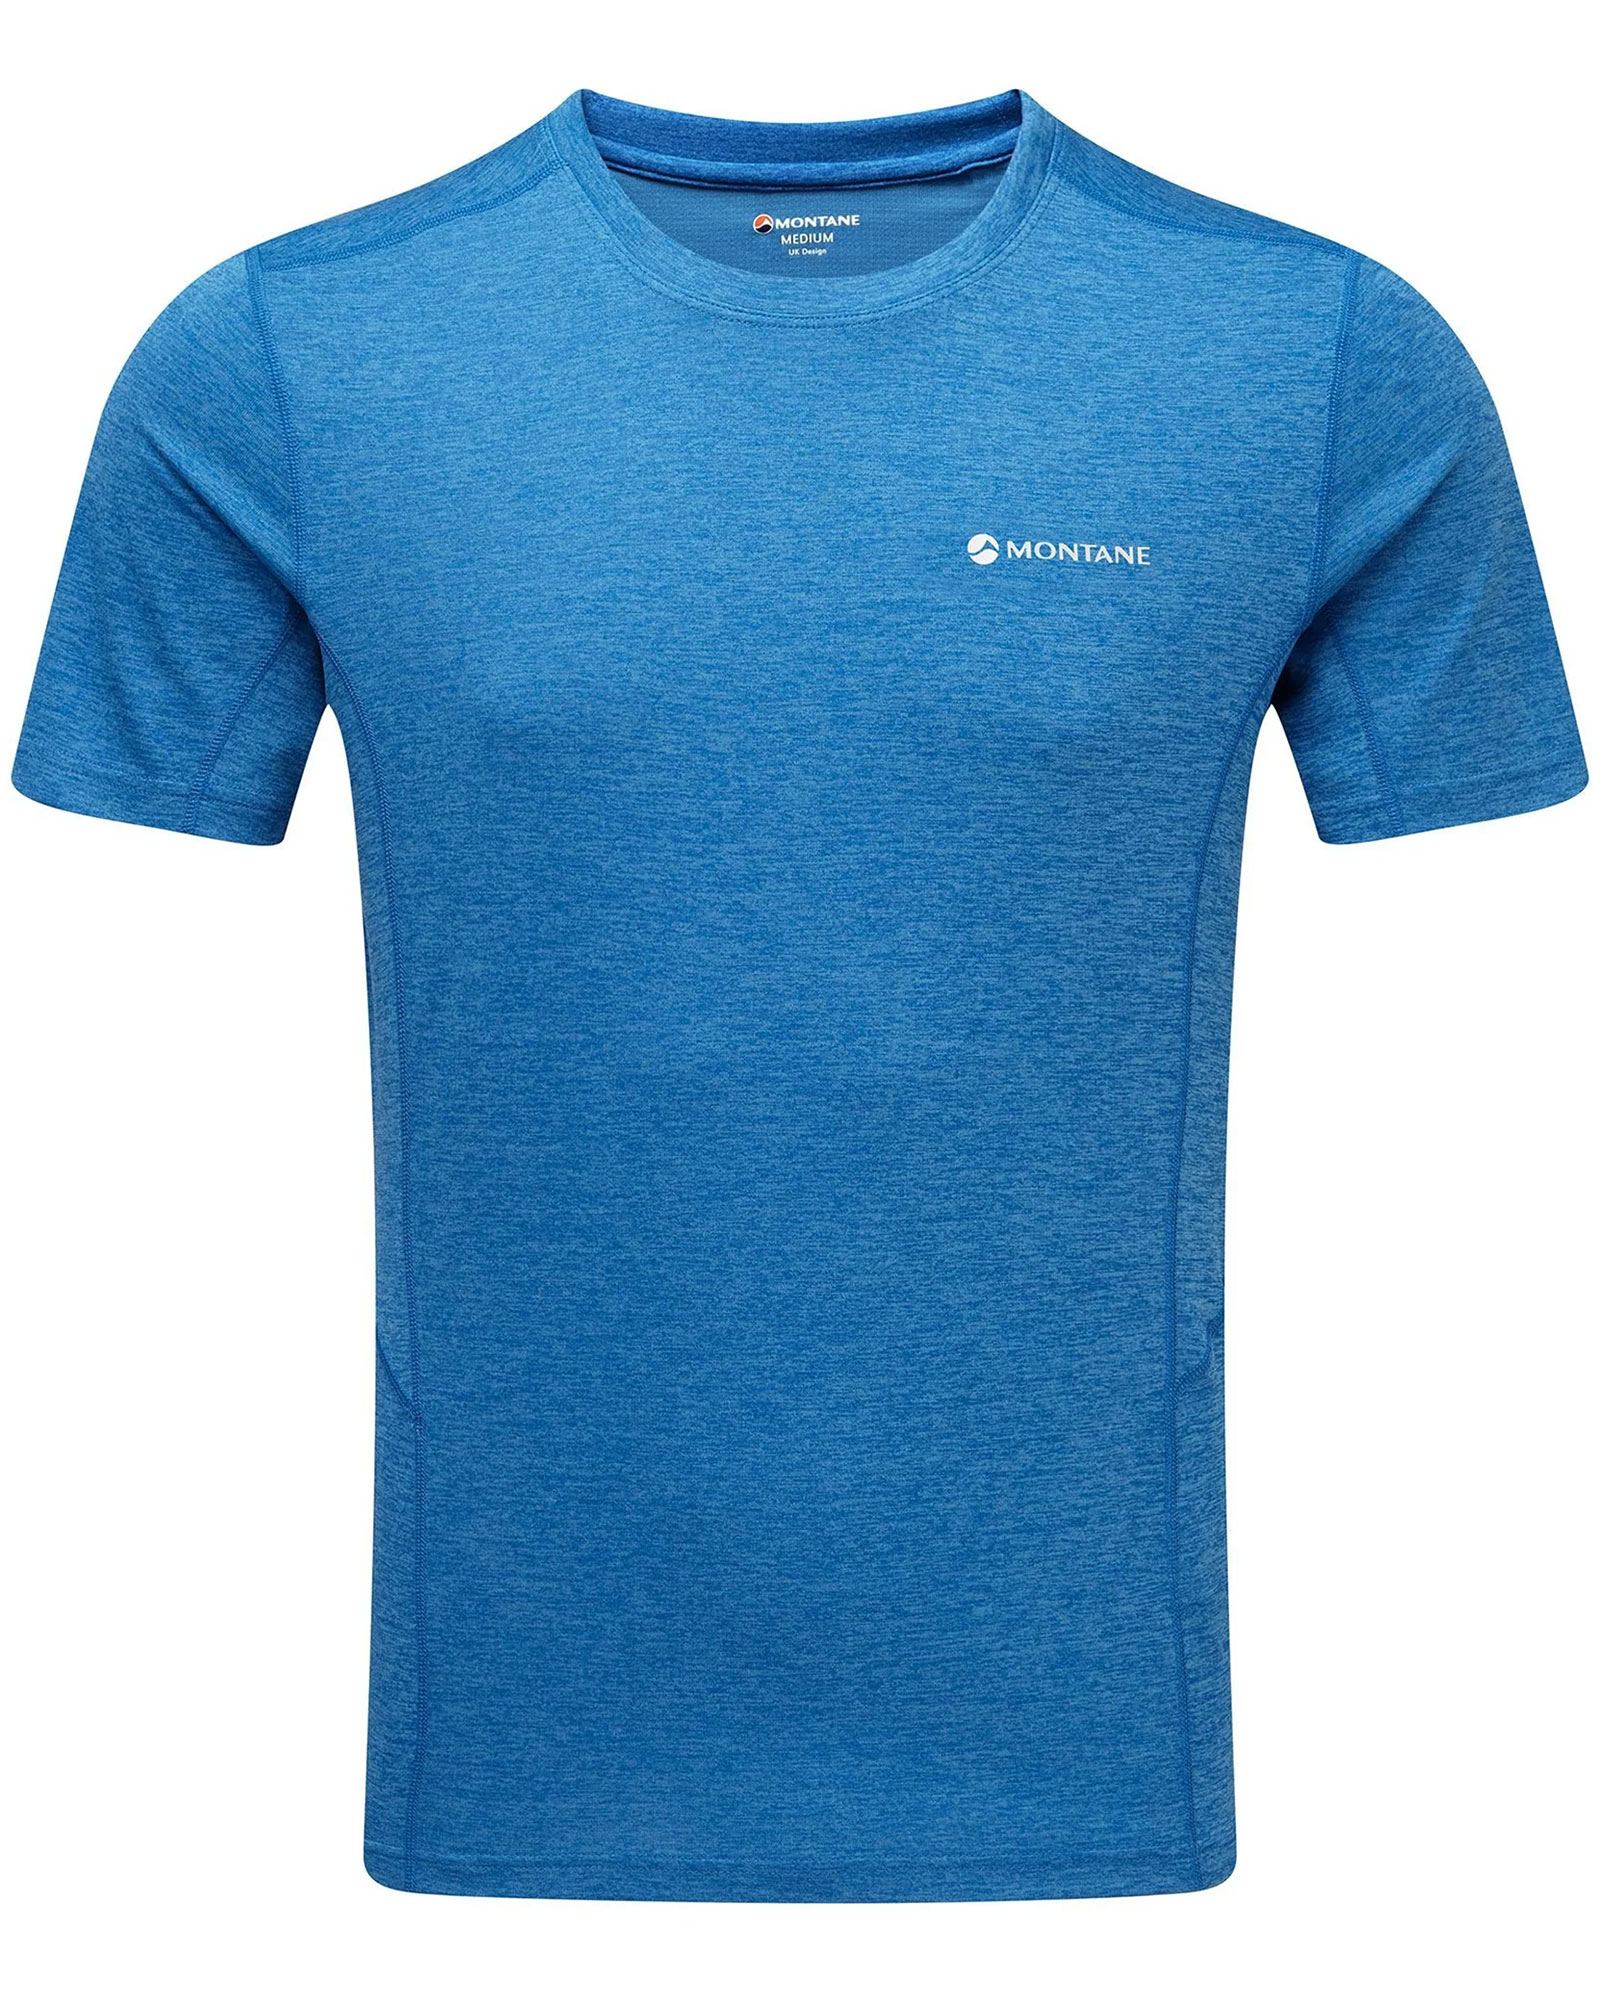 Montane Dart Shorts Sleeve Men’s T Shirt - Electric Blue S